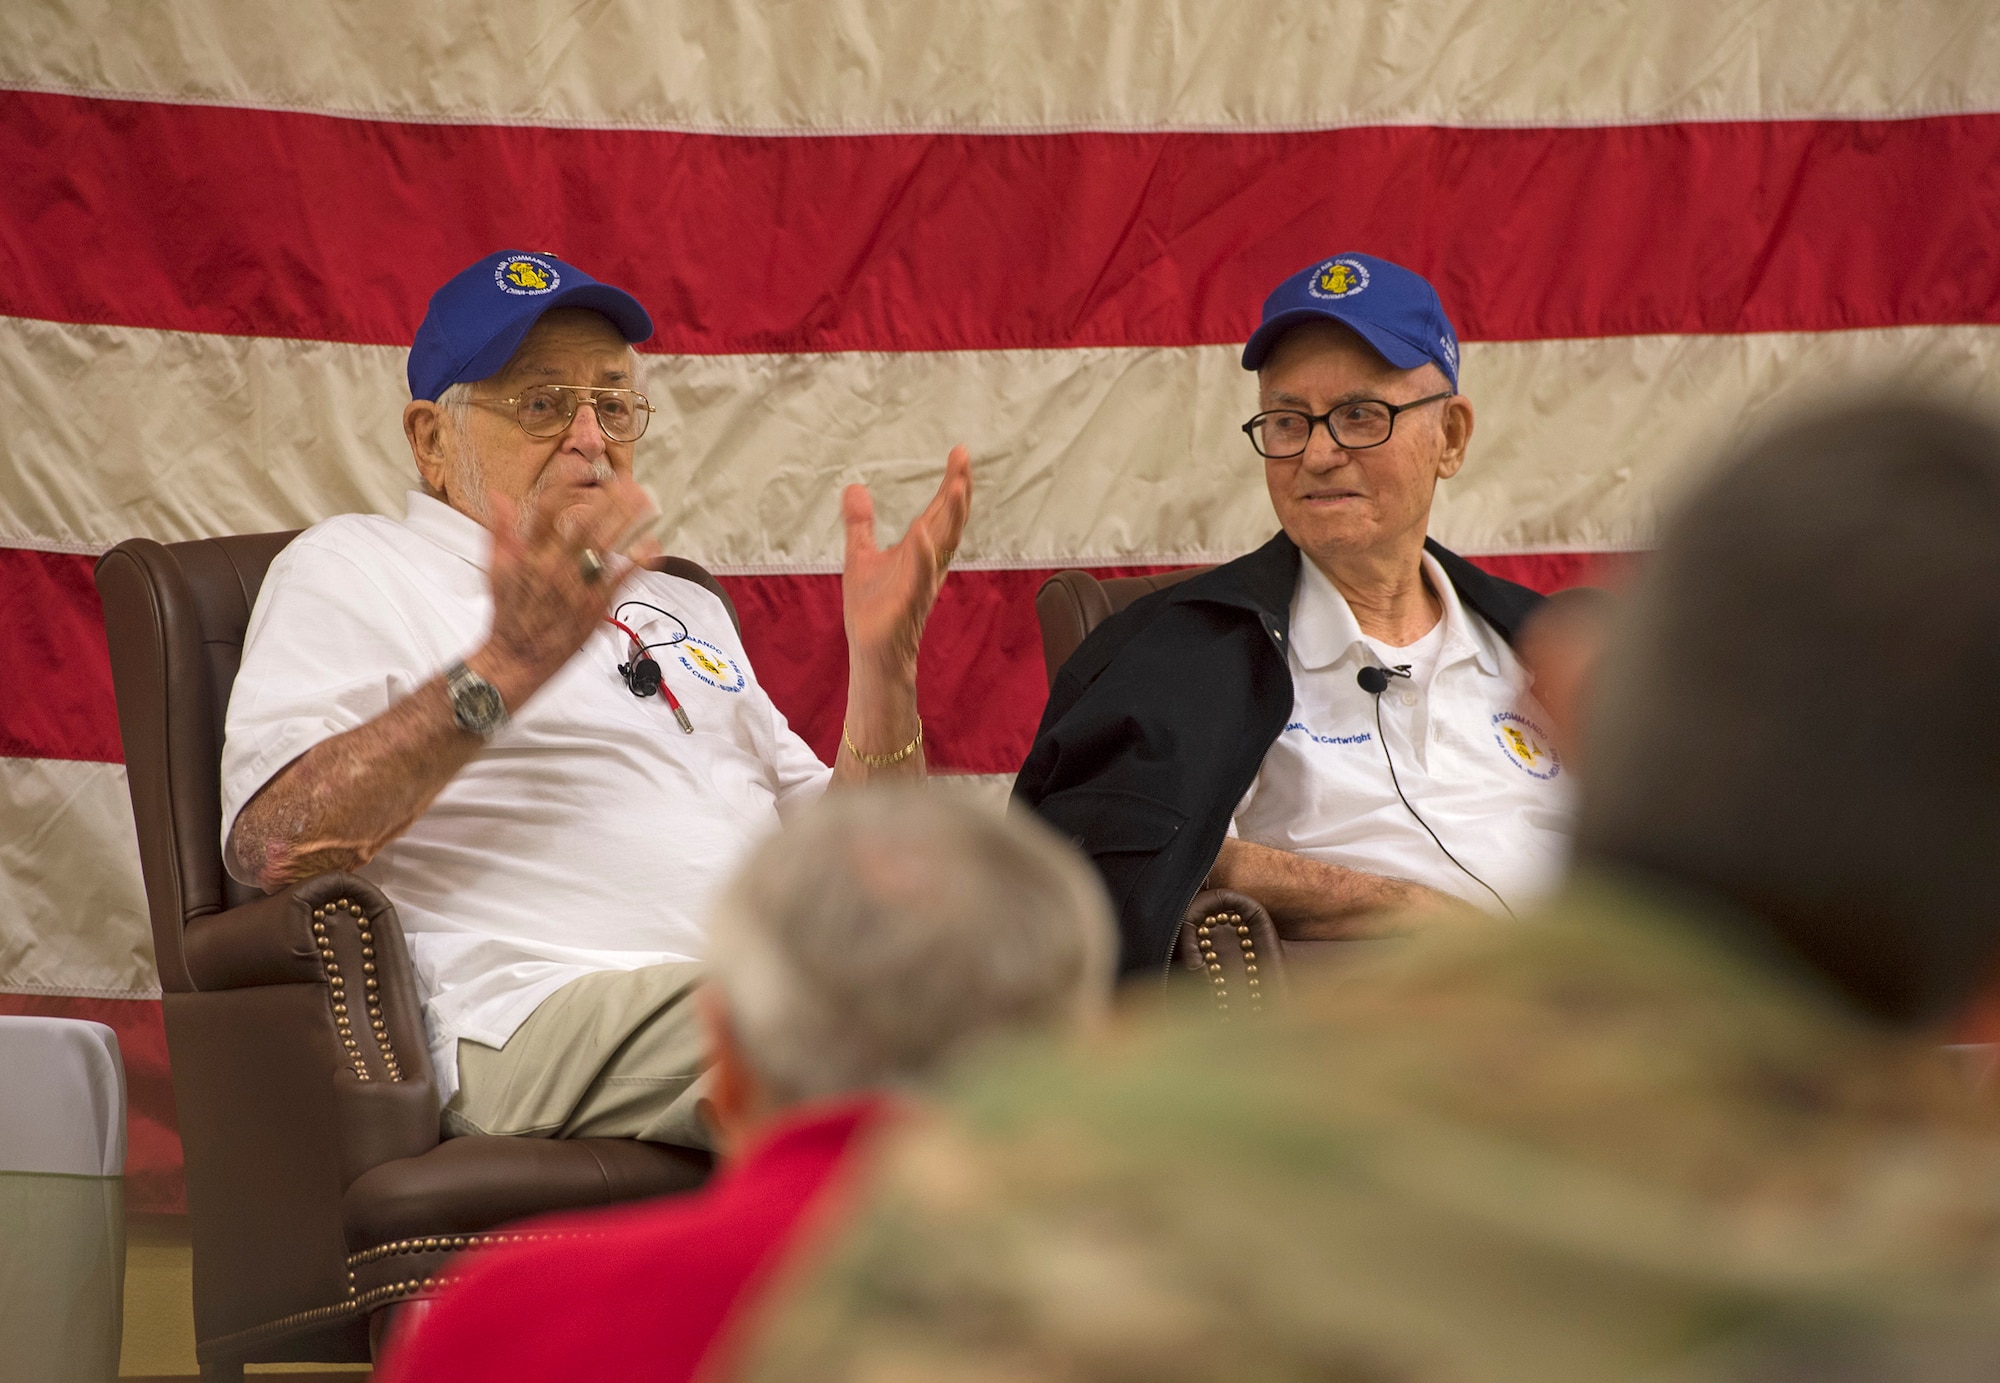 World War II veteran answers question alongside other veterans